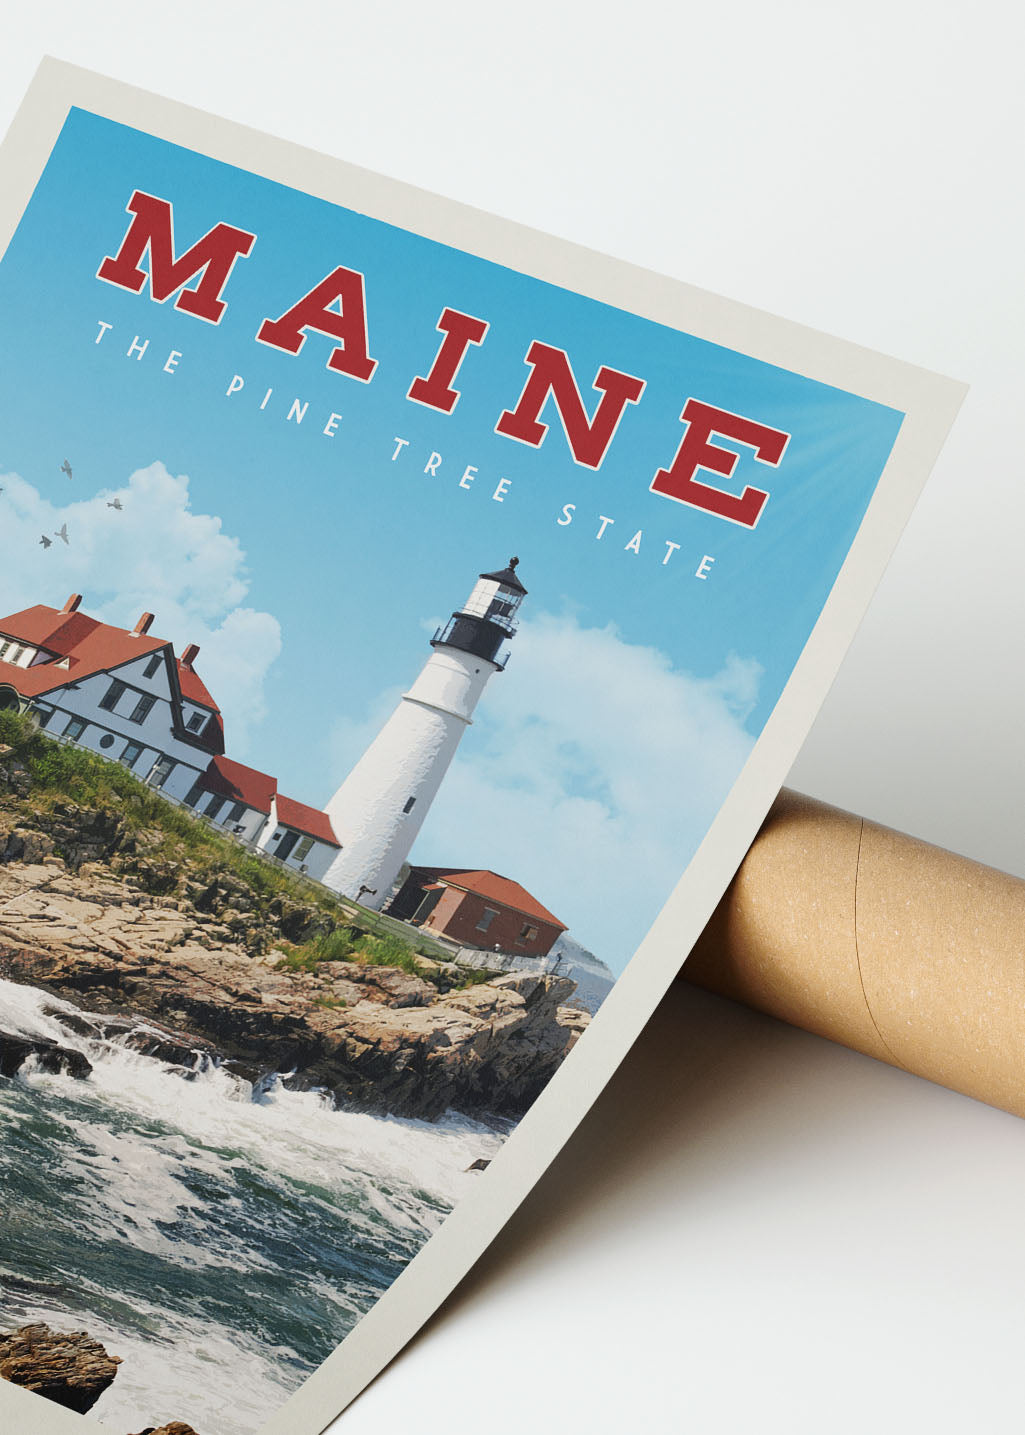 Maine - Vintage Travel Print - Vintaprints